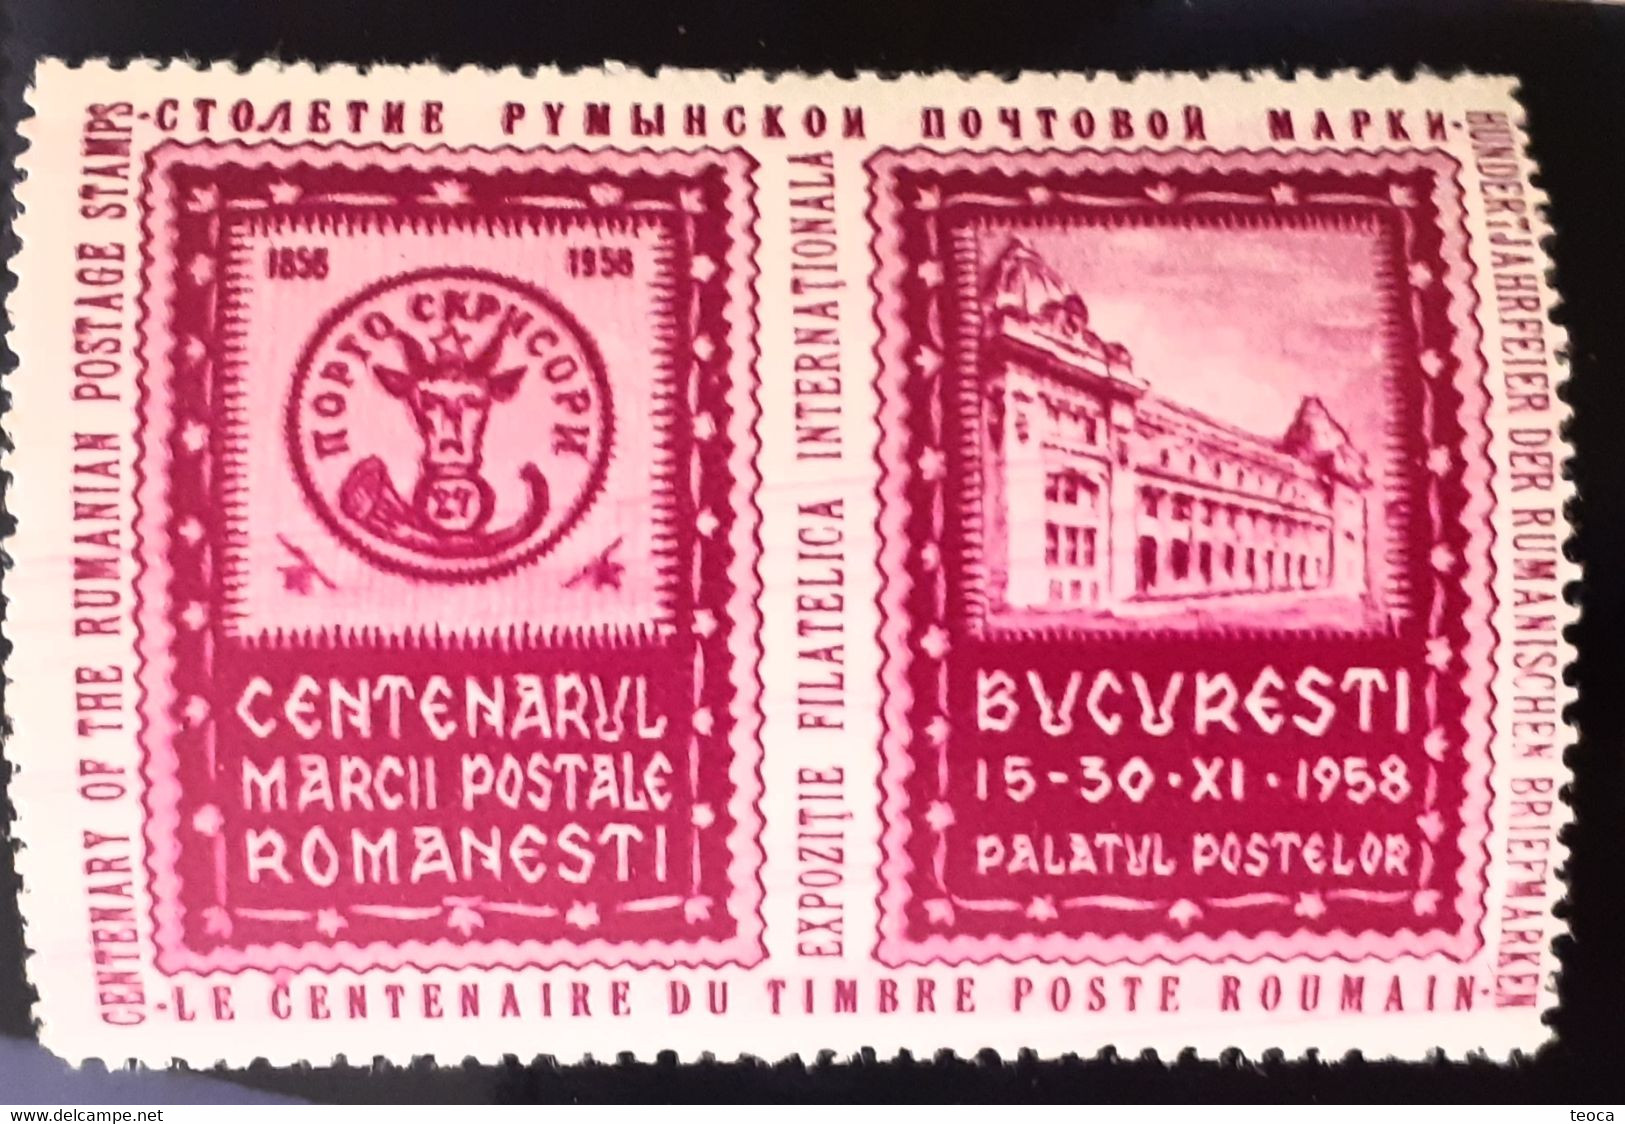 Stamps  Errors Romania 1958 Printed With Lines Vertical, Bull Head, Palace Post, Mnh - Variétés Et Curiosités